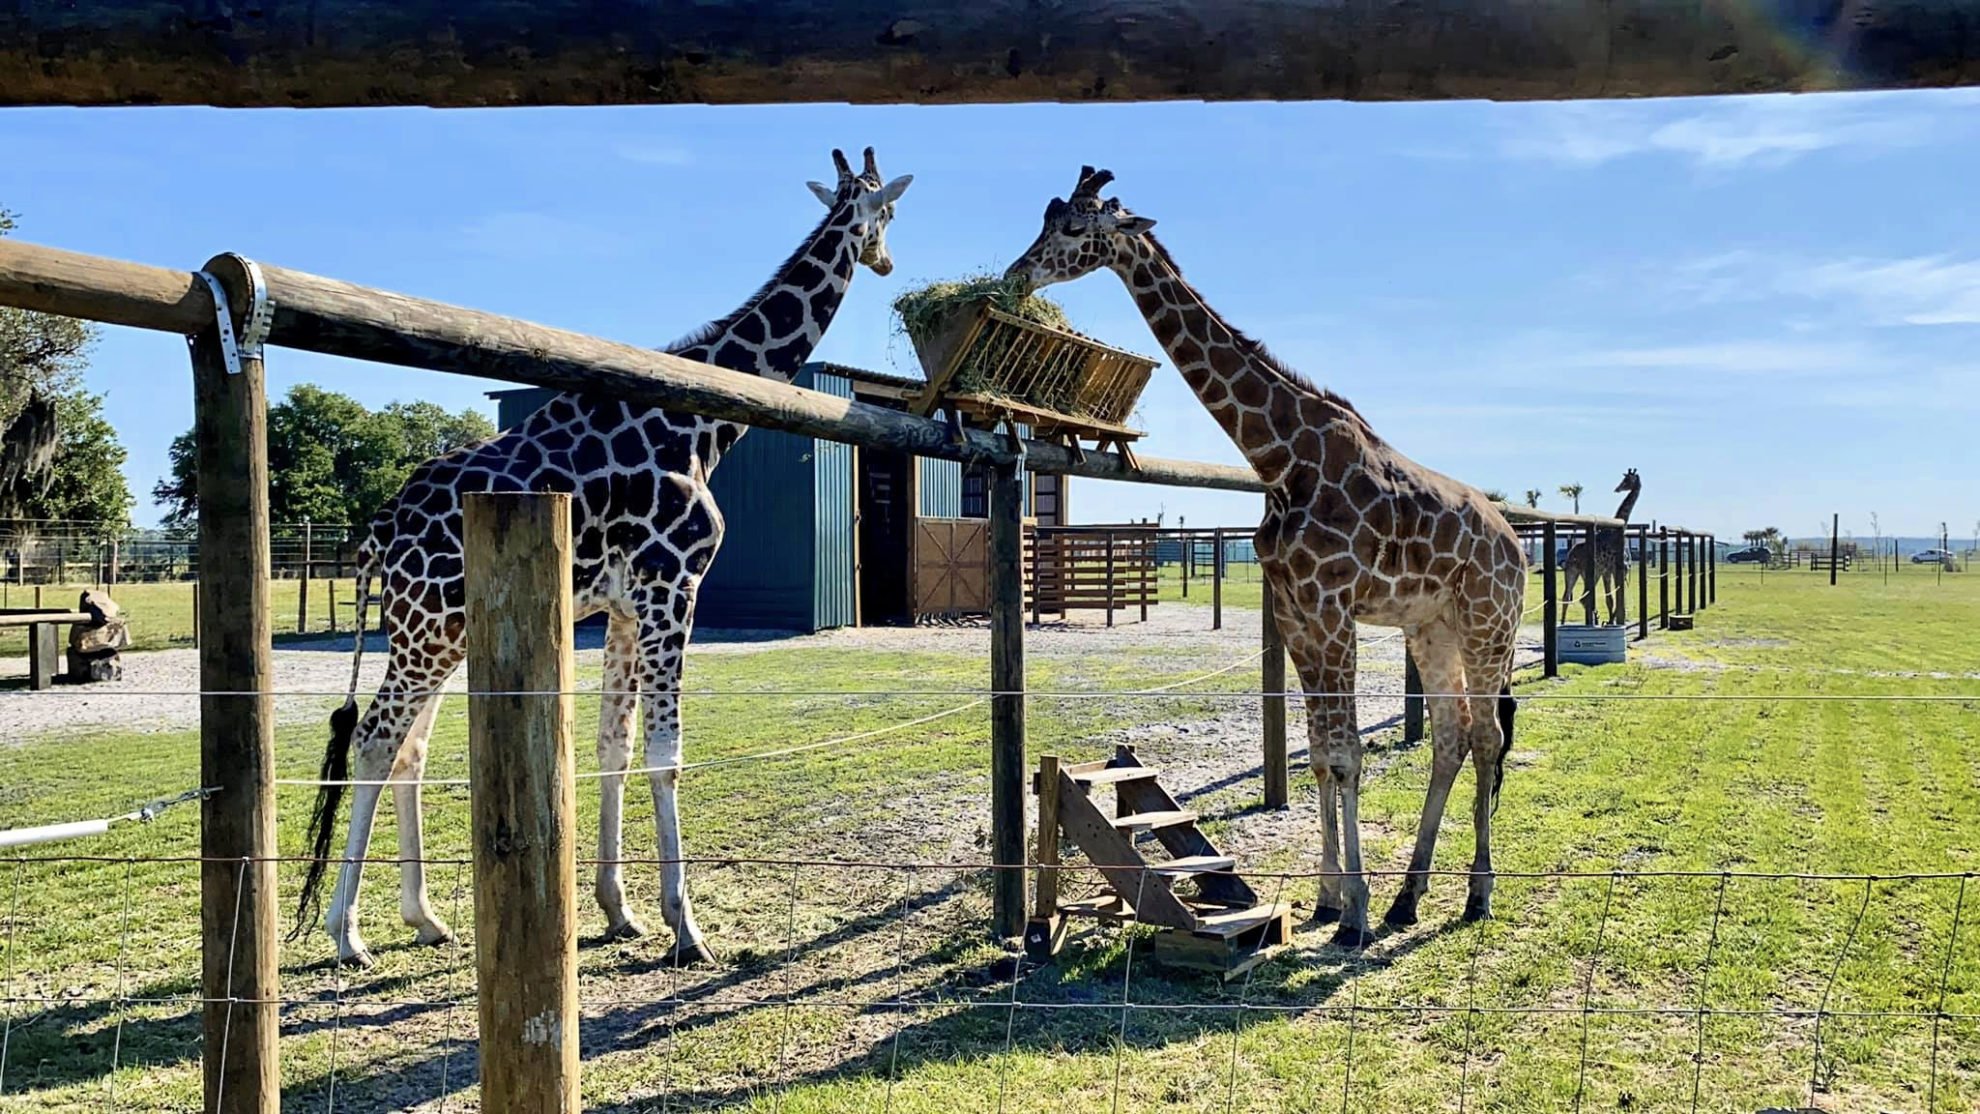 Reticulated Giraffe eating at Wild Florida Drive-Thru Safari Park